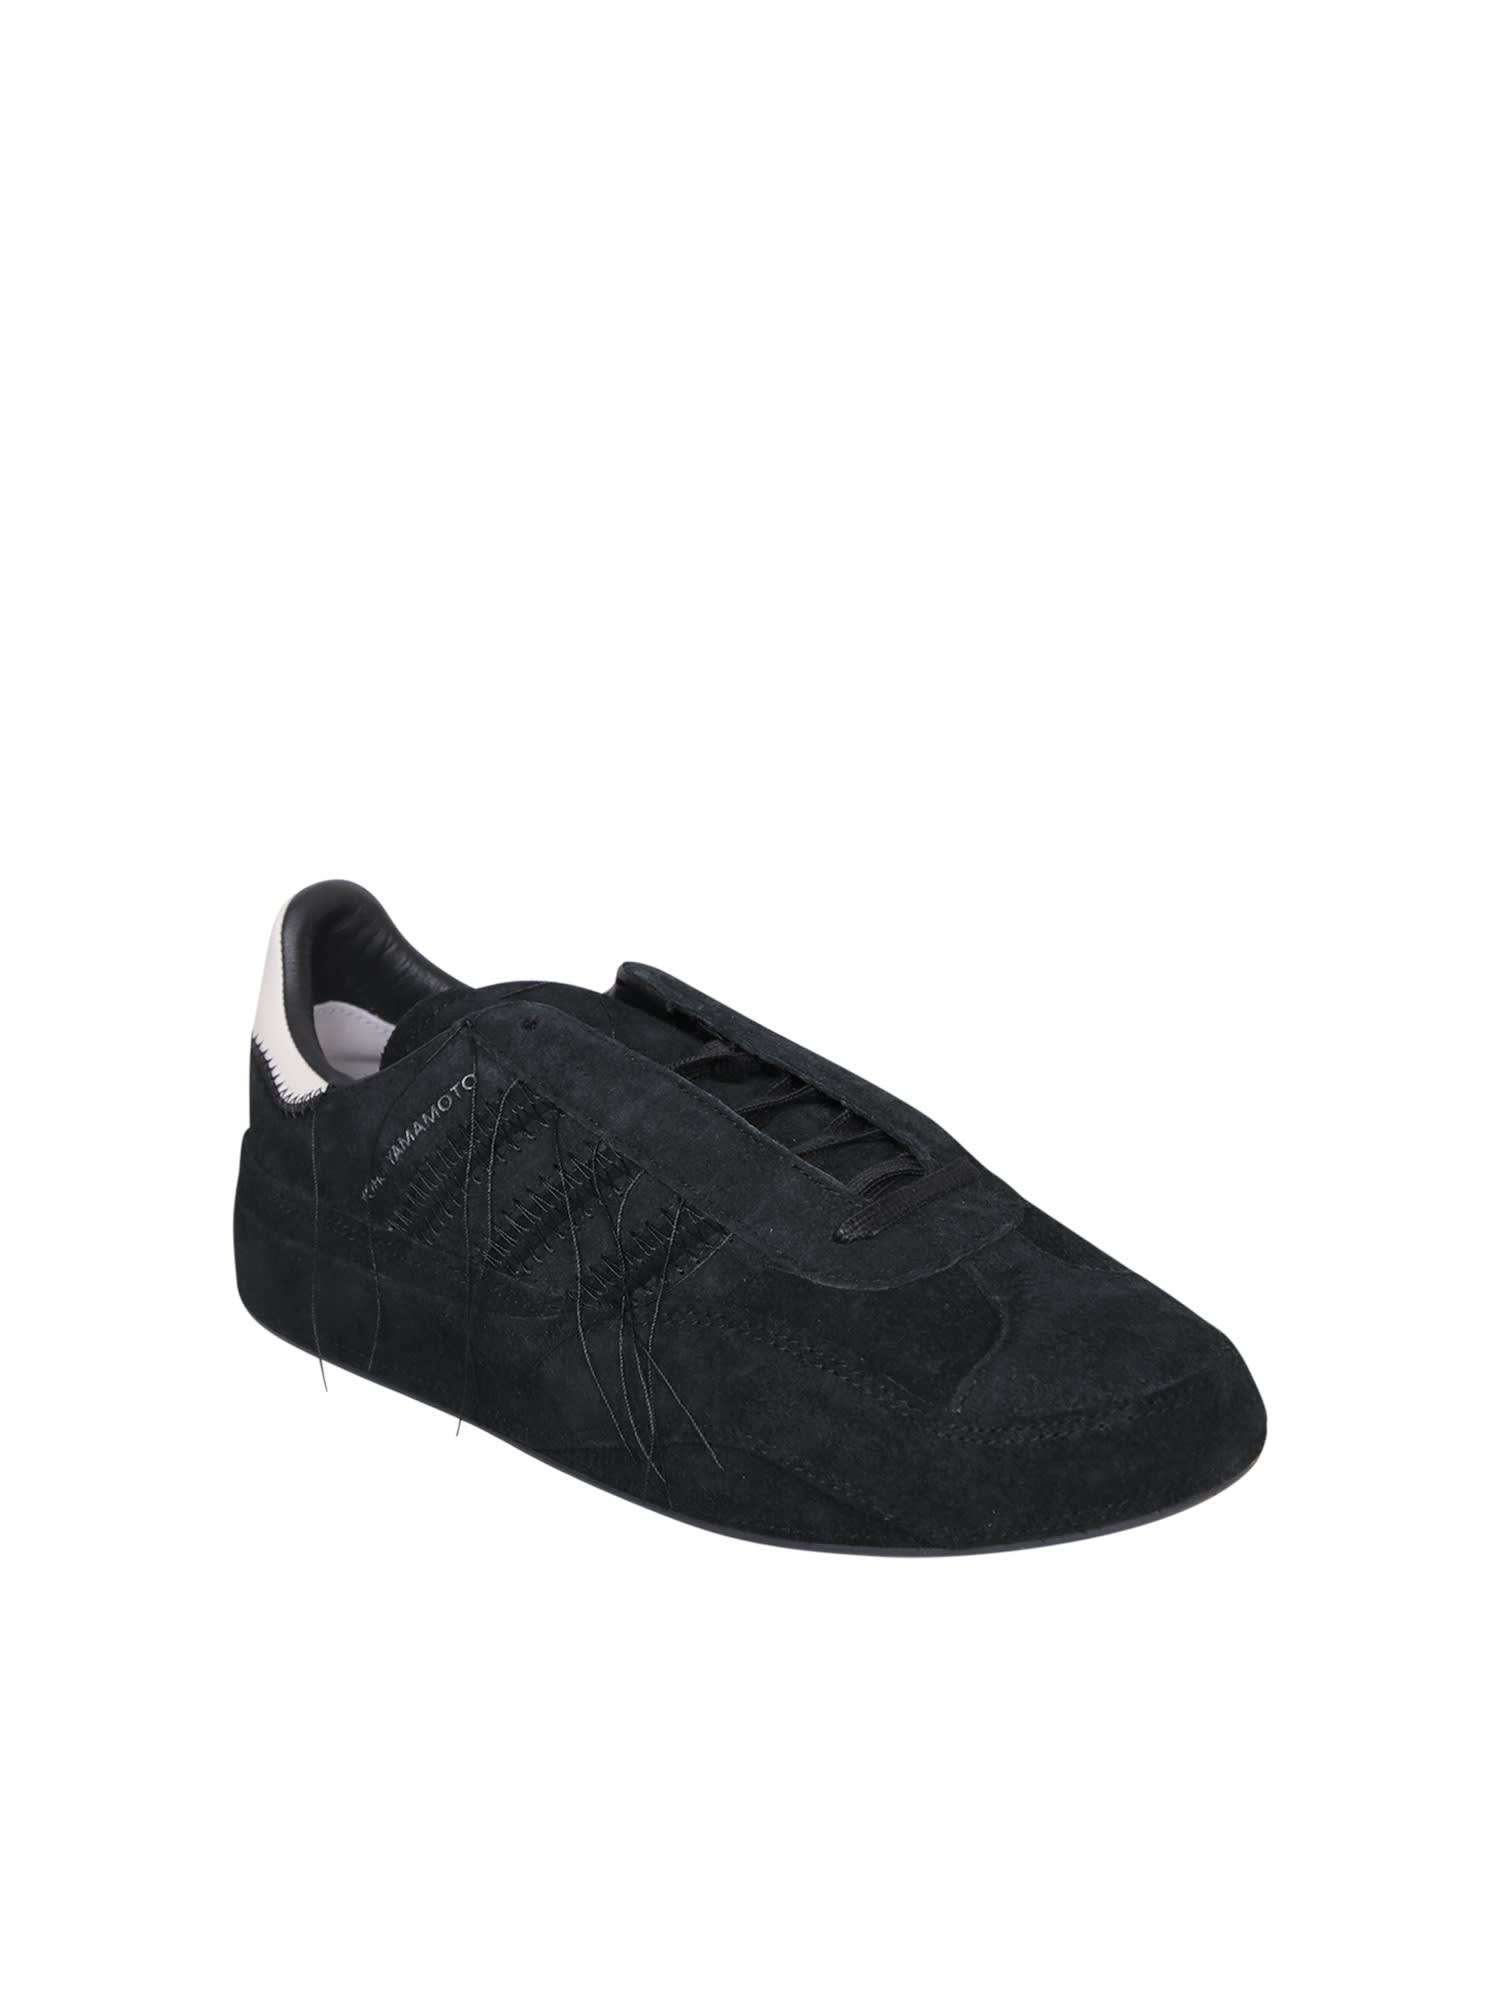 Shop Y-3 Gazelle Black Sneakers